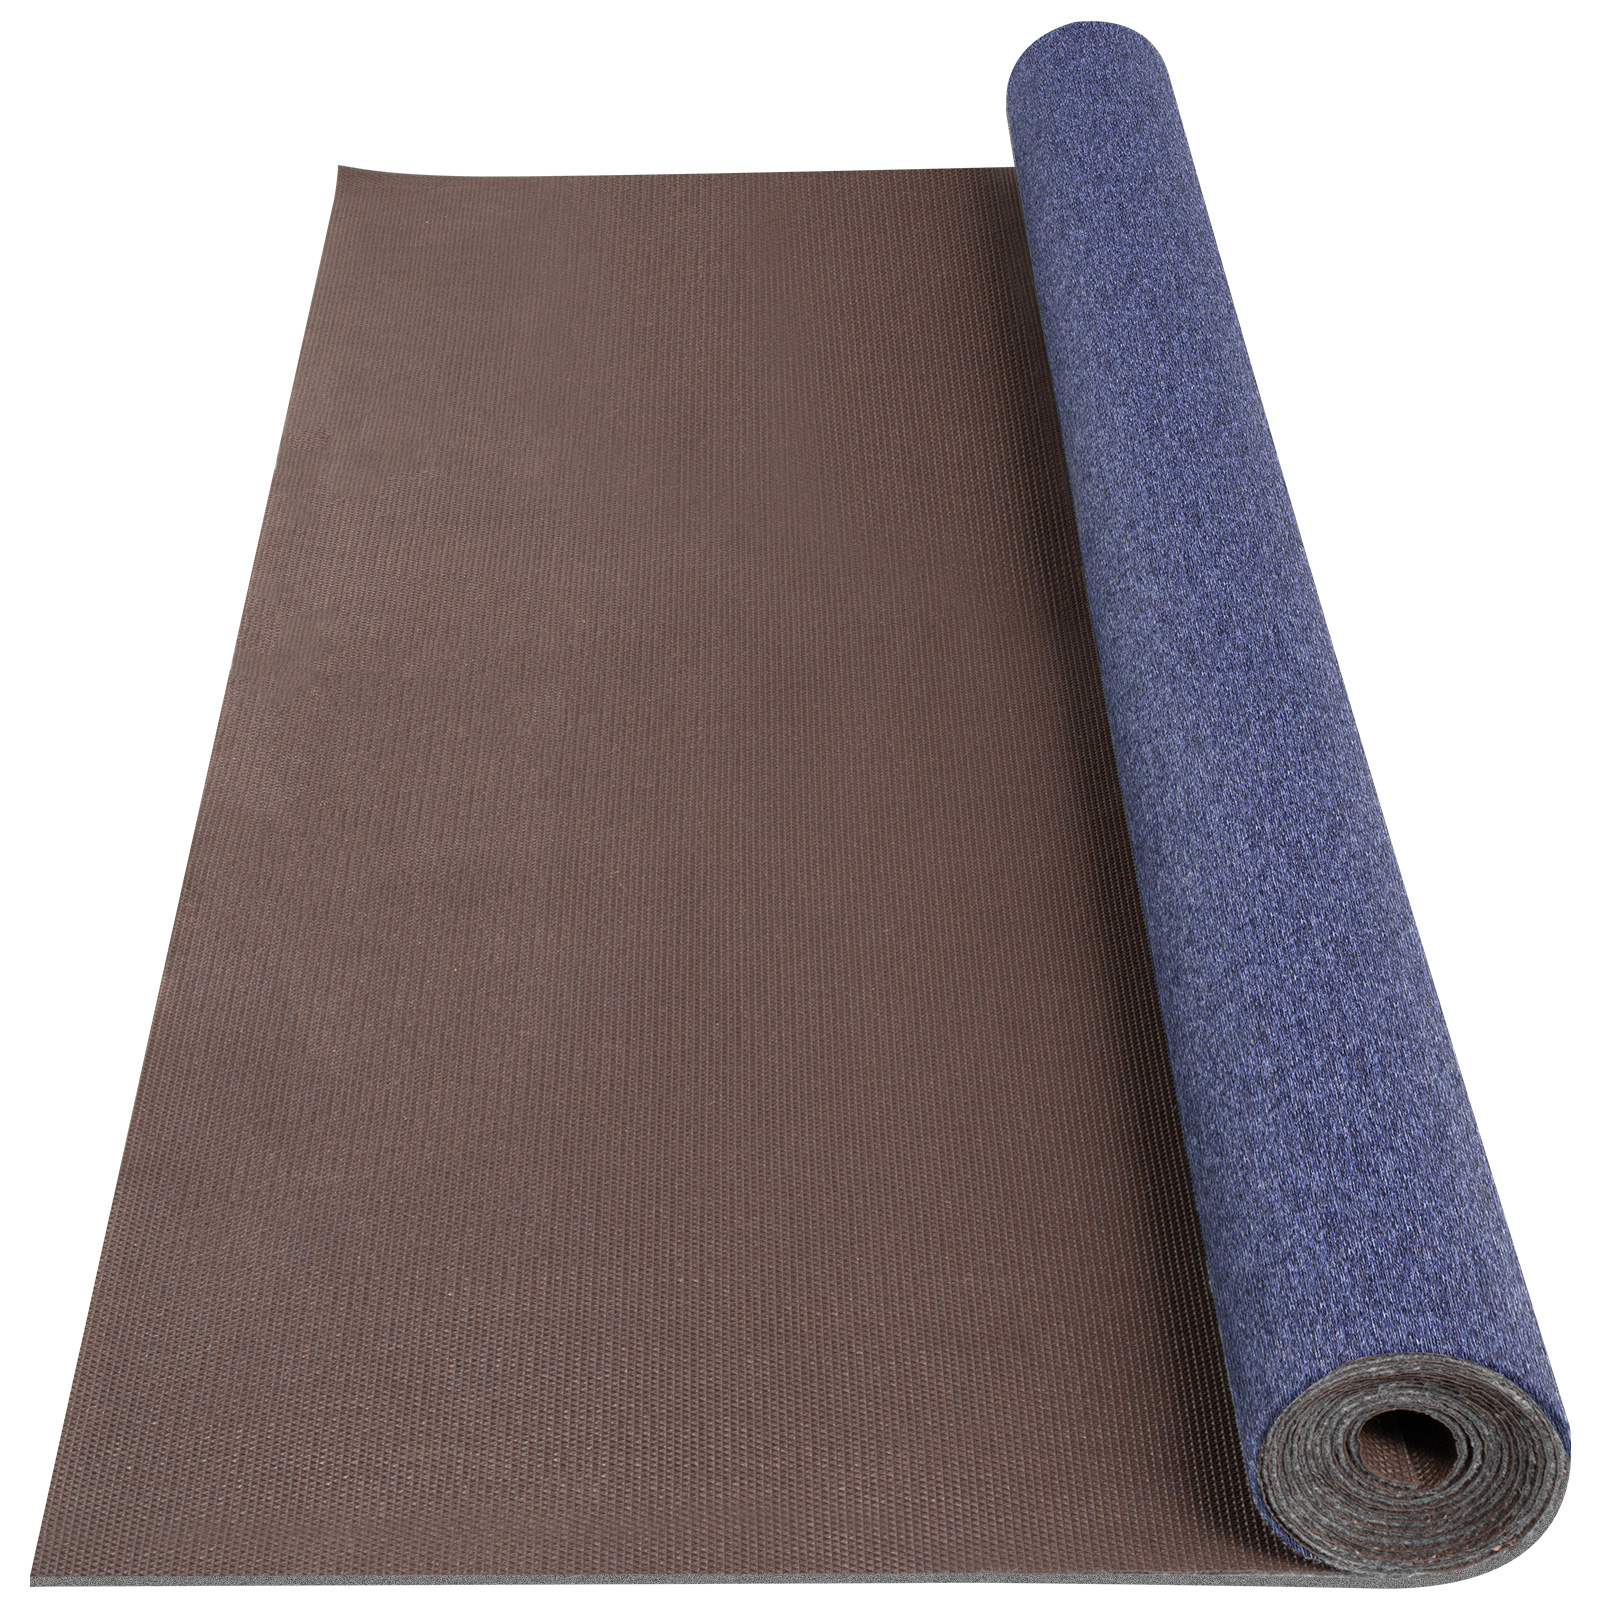 Bass Boat Carpet 6'x39.3' Cutpile Marine Carpet 32 oz In/Outdoor Patio Area Rugs 